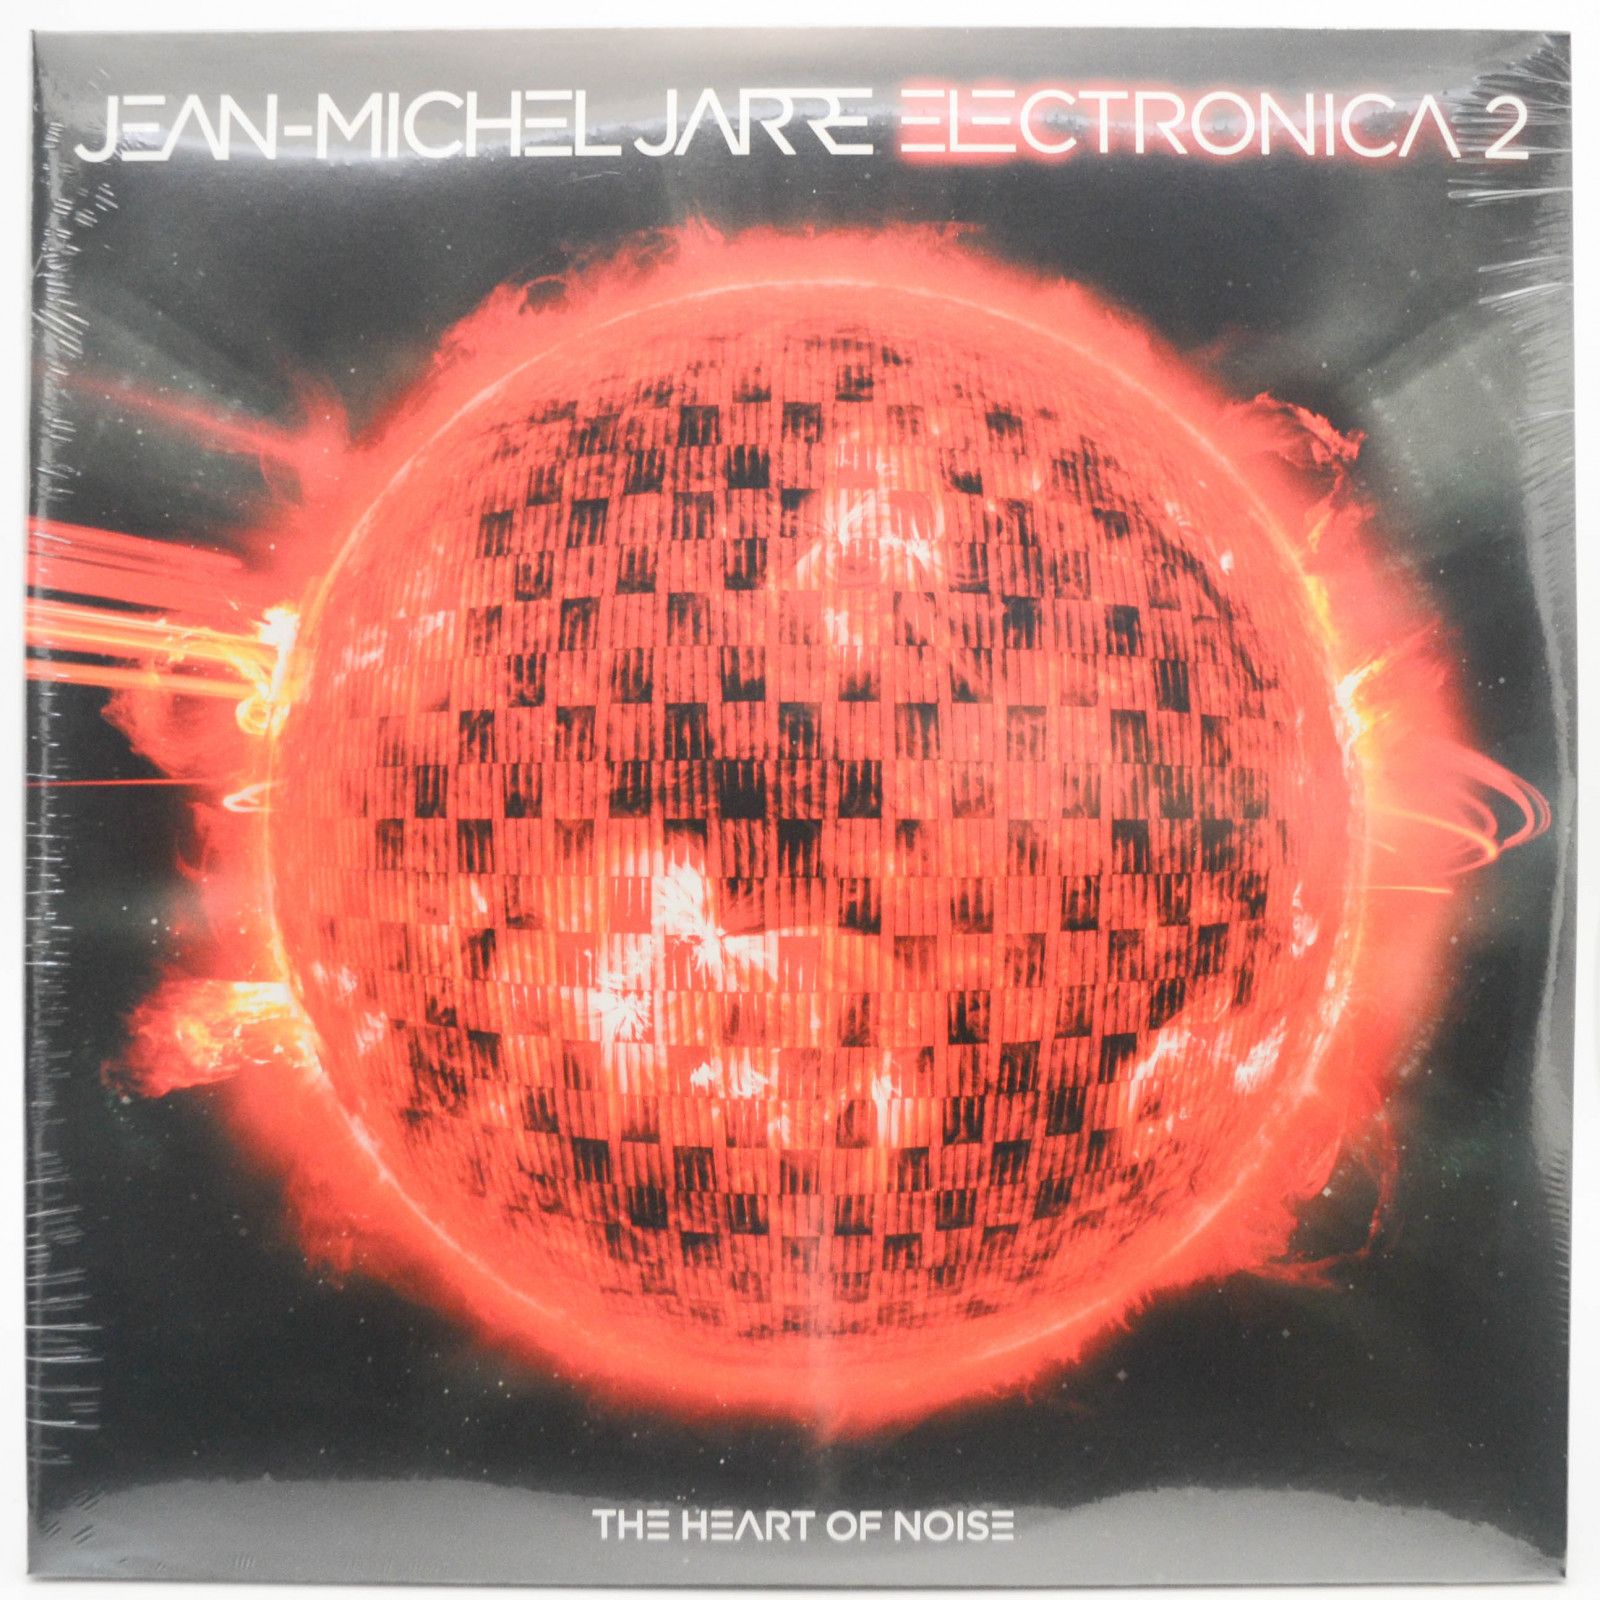 Jean-Michel Jarre — Electronica 2 - The Heart Of Noise (2LP), 2016